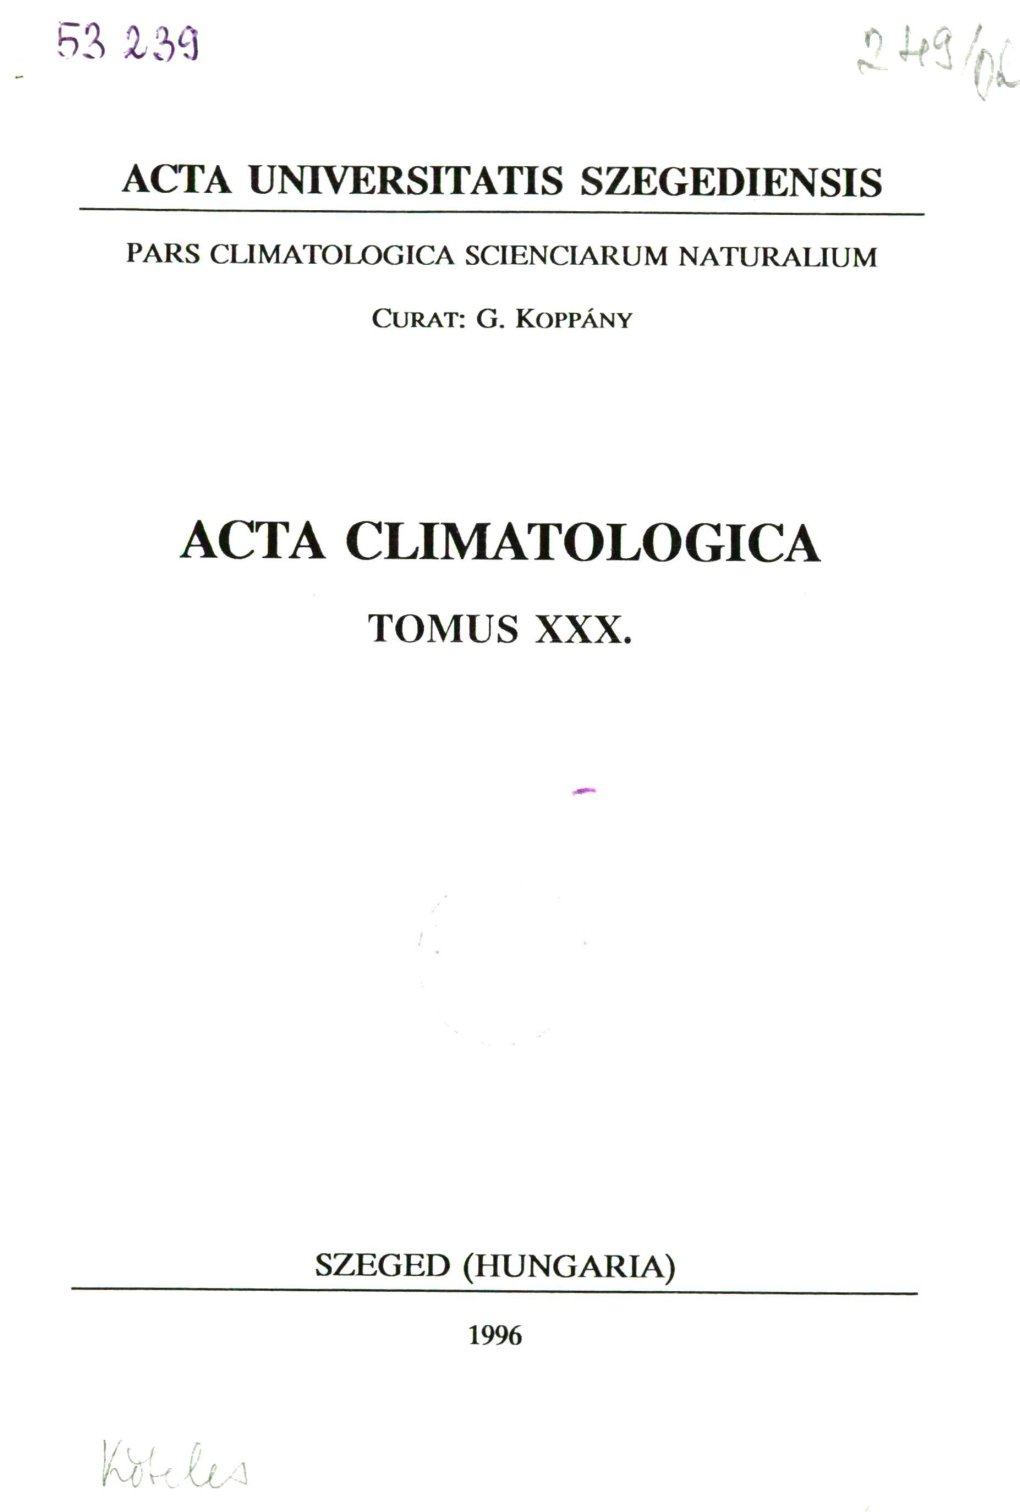 Acta Climatologica